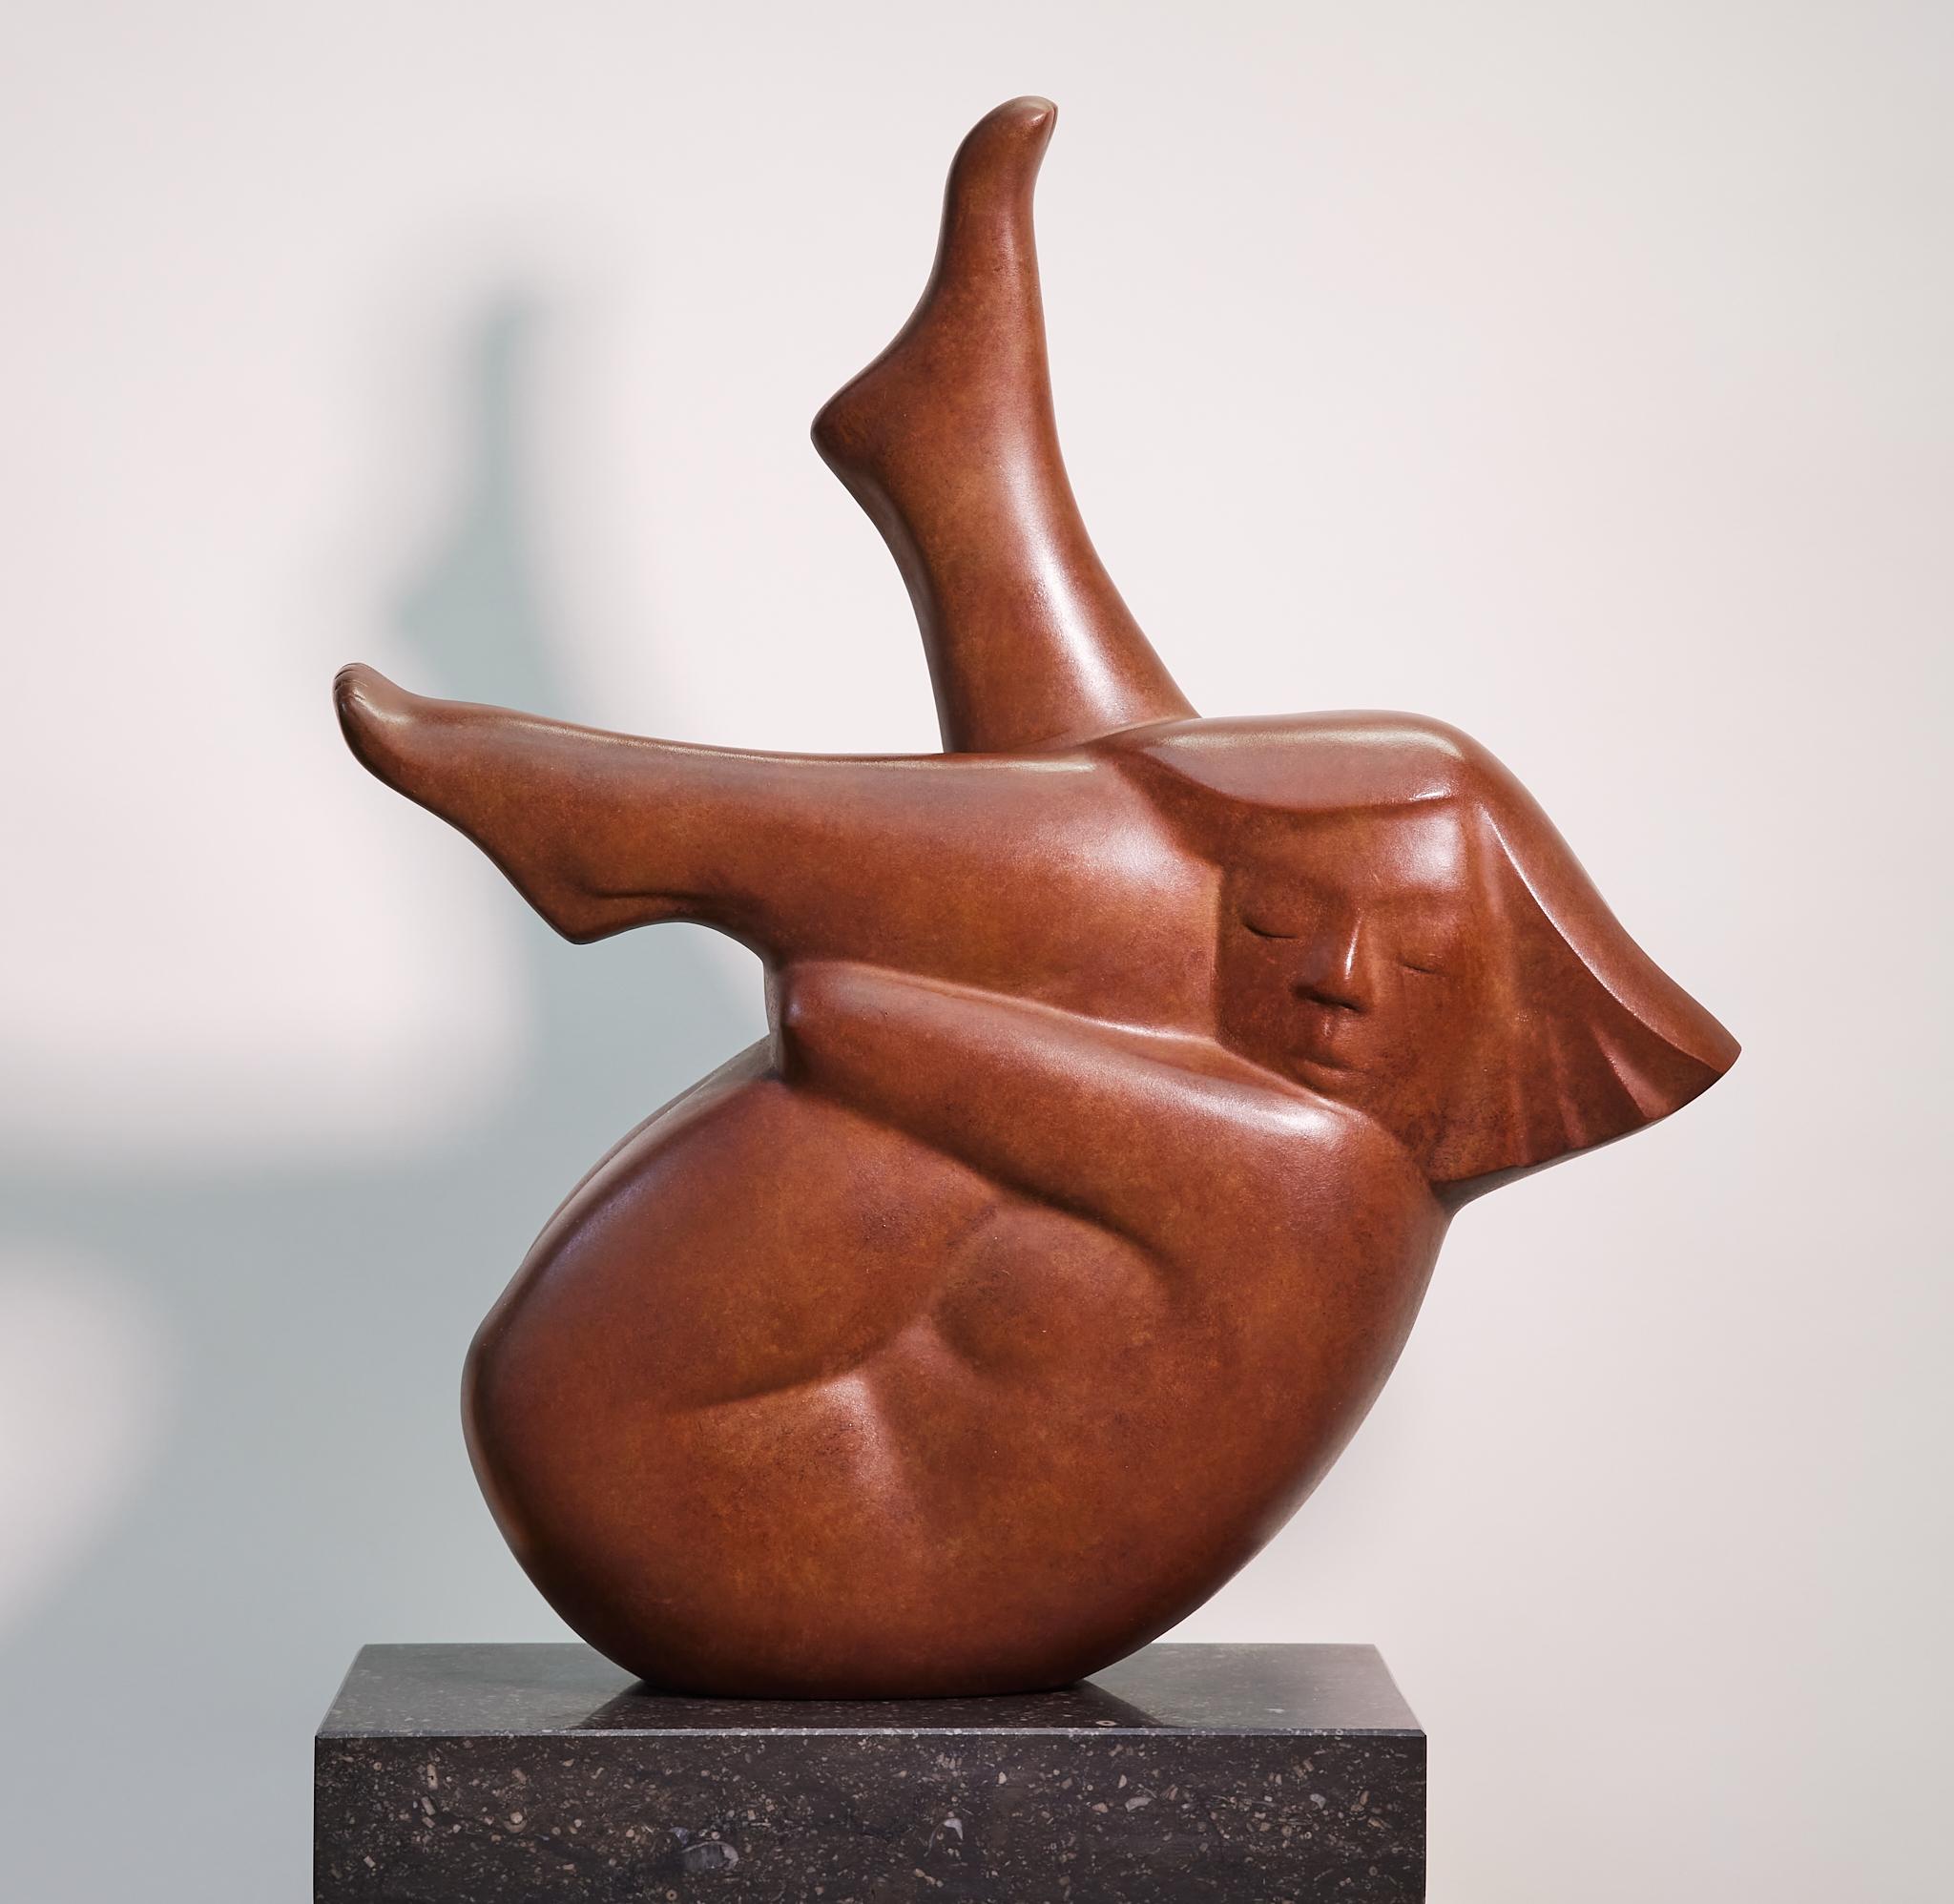 Figurative Sculpture Evert den Hartog - Liggend Meisje, jeune fille allongée, sculpture en bronze, édition limitée en stock